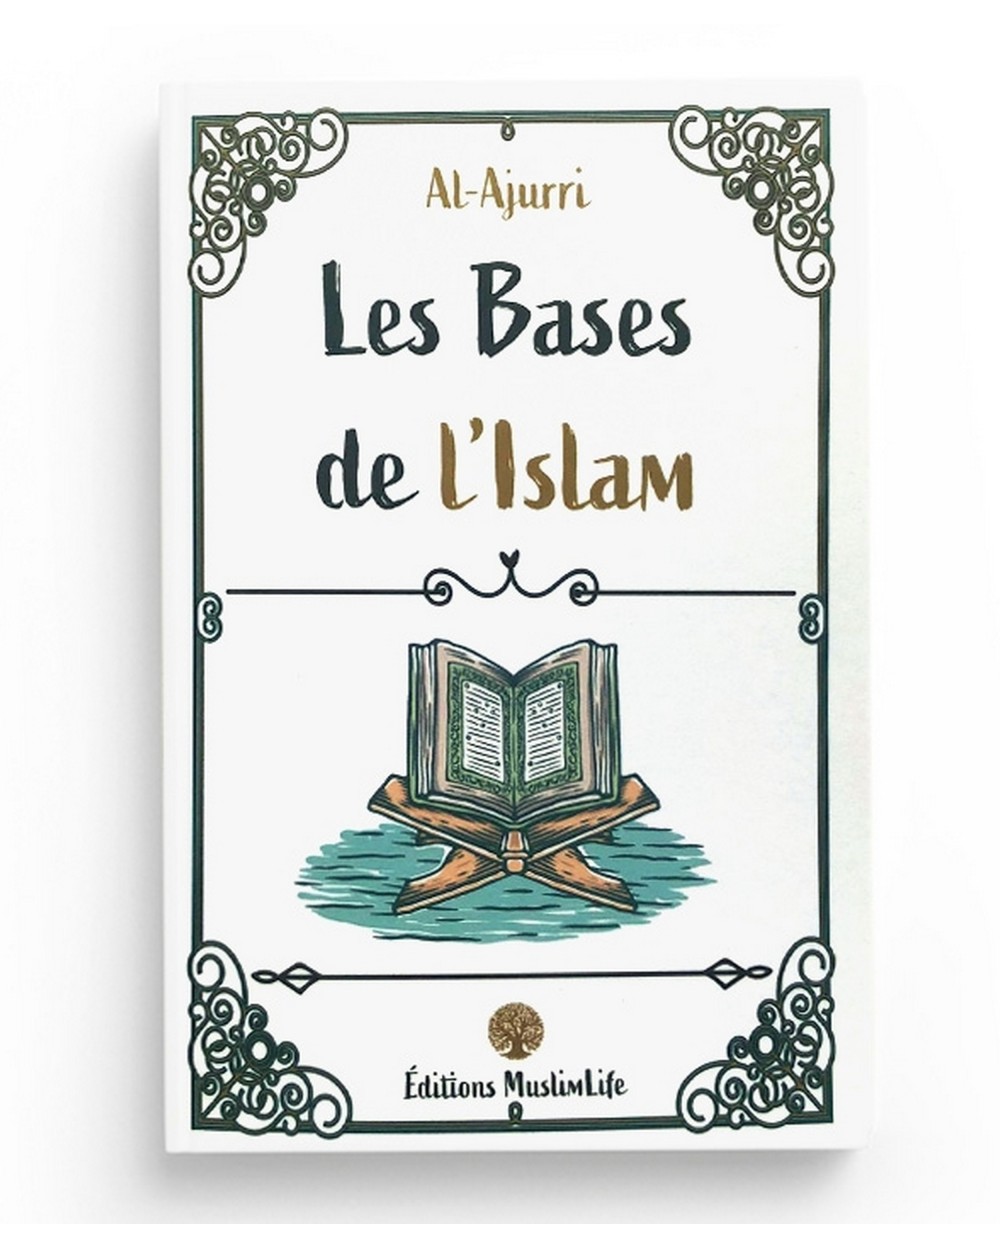 The basics of Islam - Al Ajurri - Editions Muslimlife